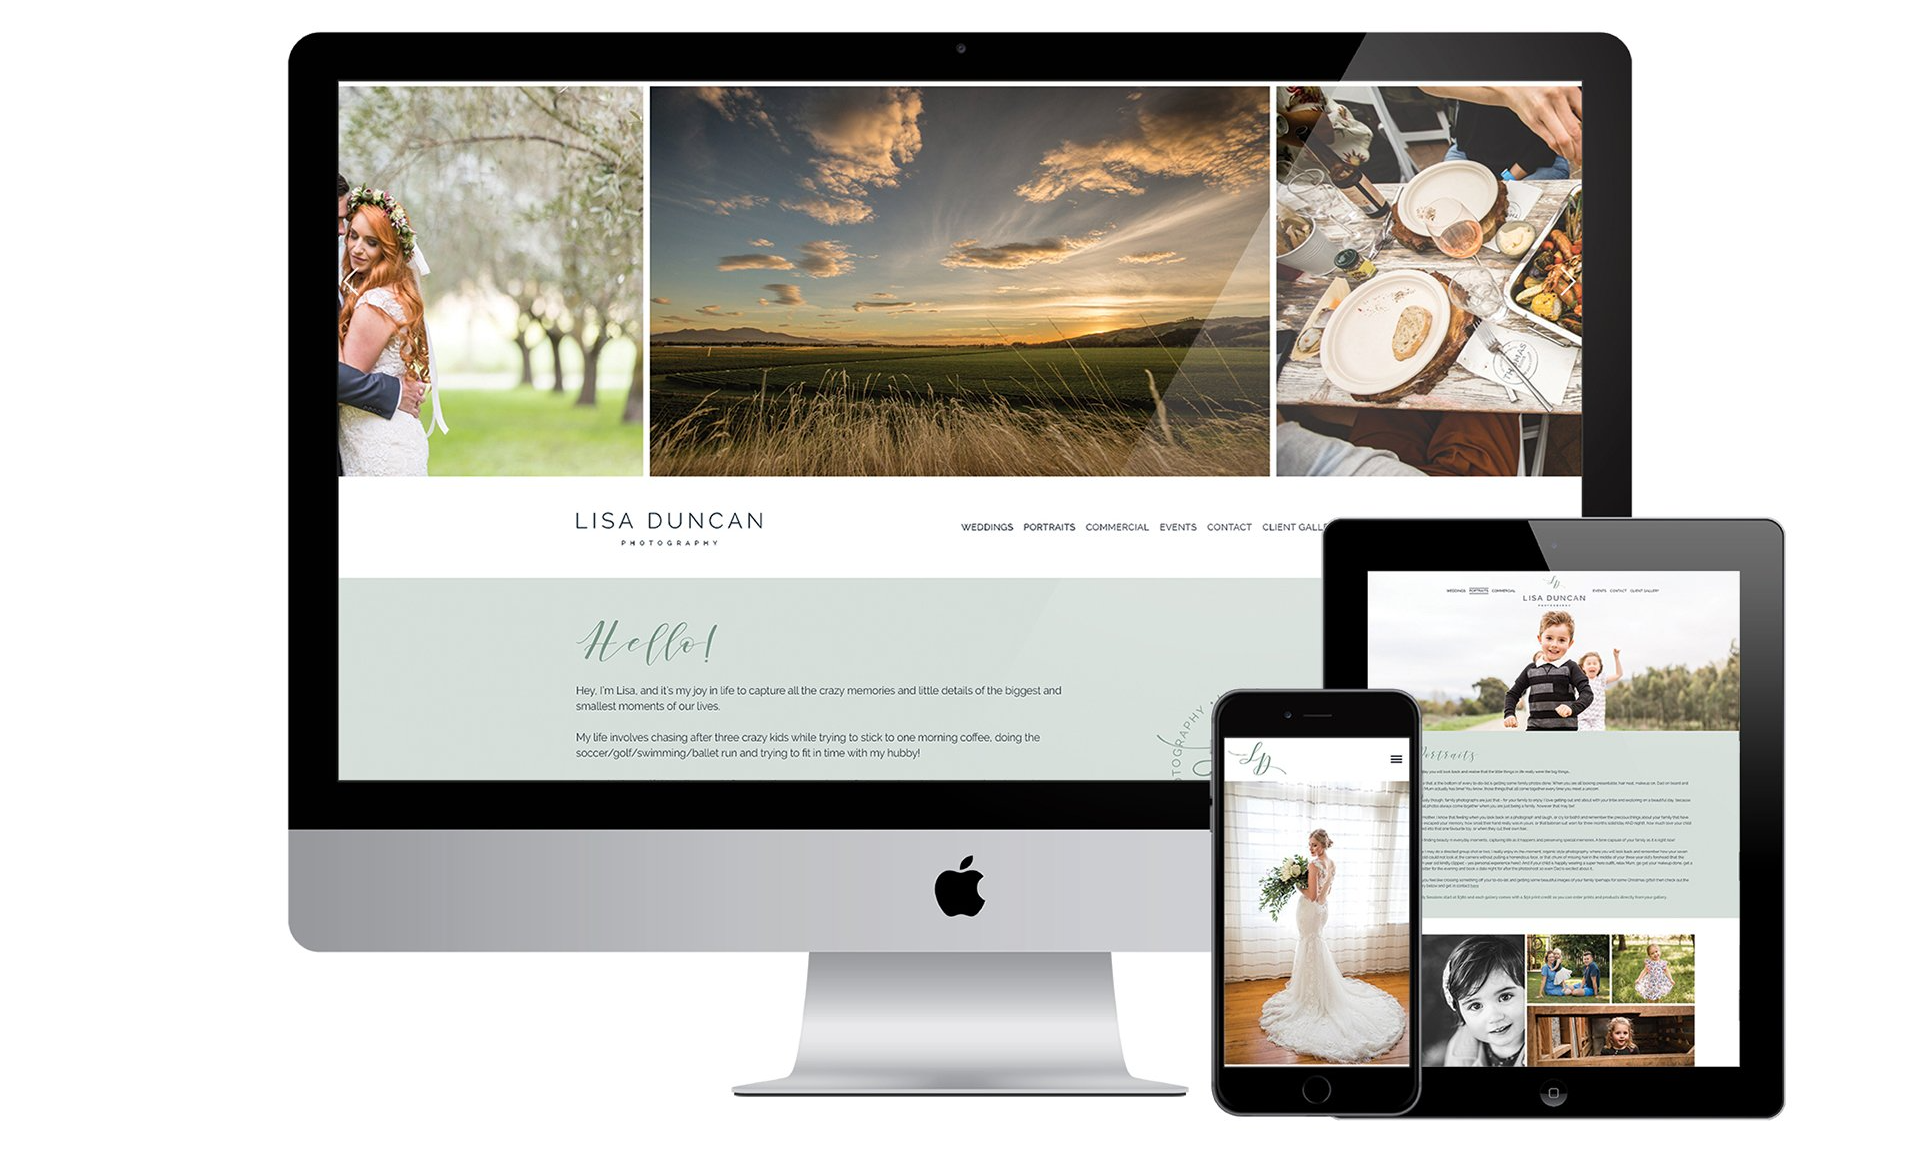 Lisa Duncan Photography website designed by Vanilla Hayes creative graphic design  studio in Blenheim, Marlborough, New Zealand